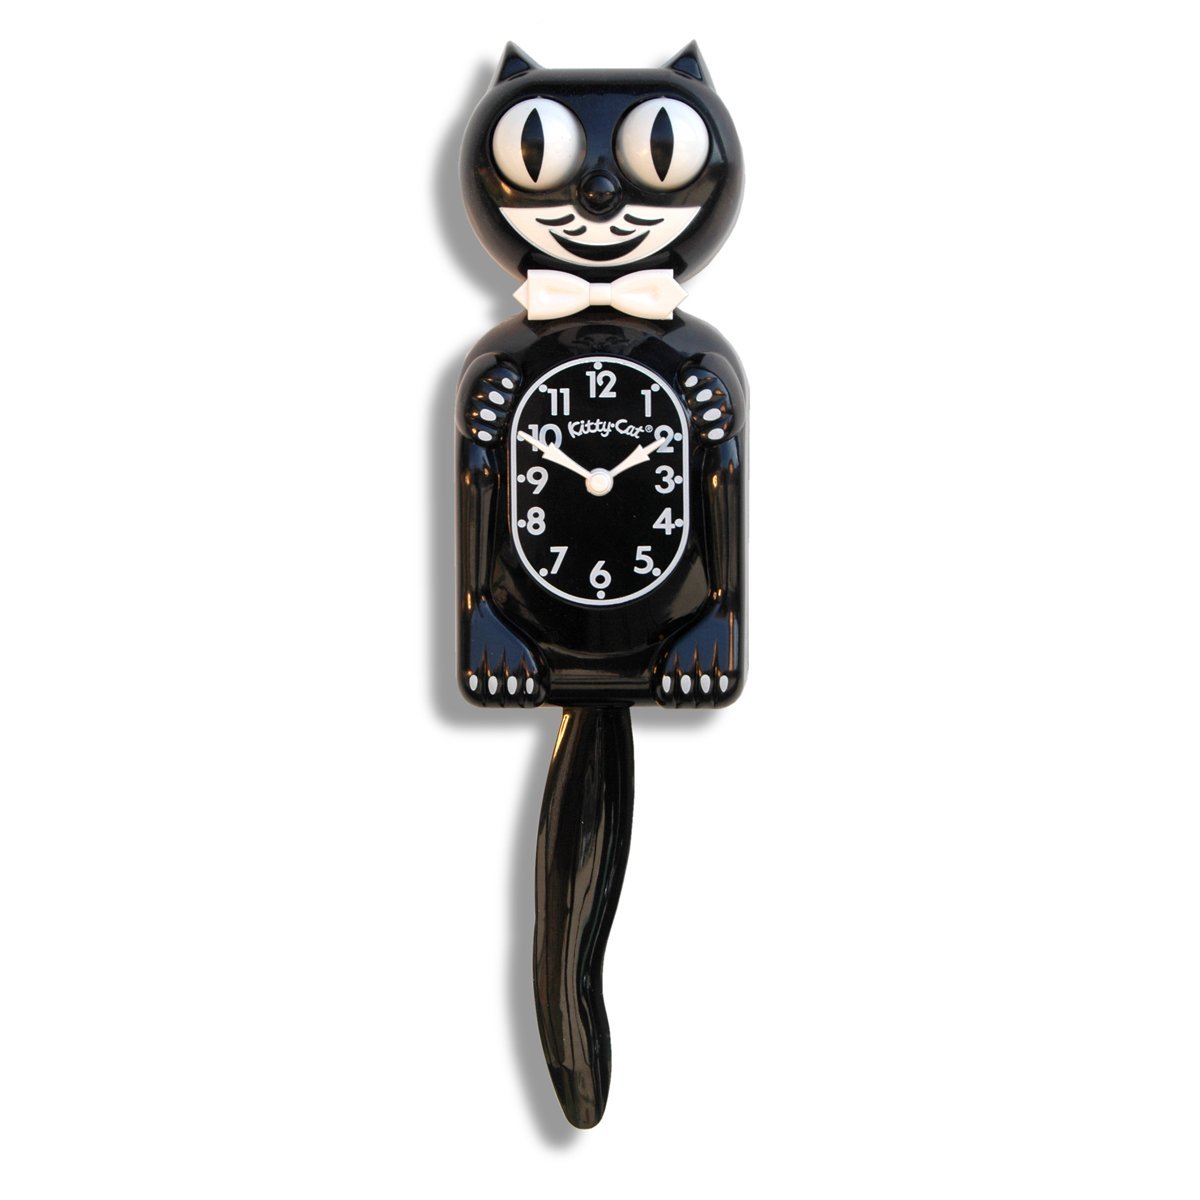 Kit Cat Klock : KCKKC1* นาฬิกาแขวนผนัง Black Kitty-Cat Klock